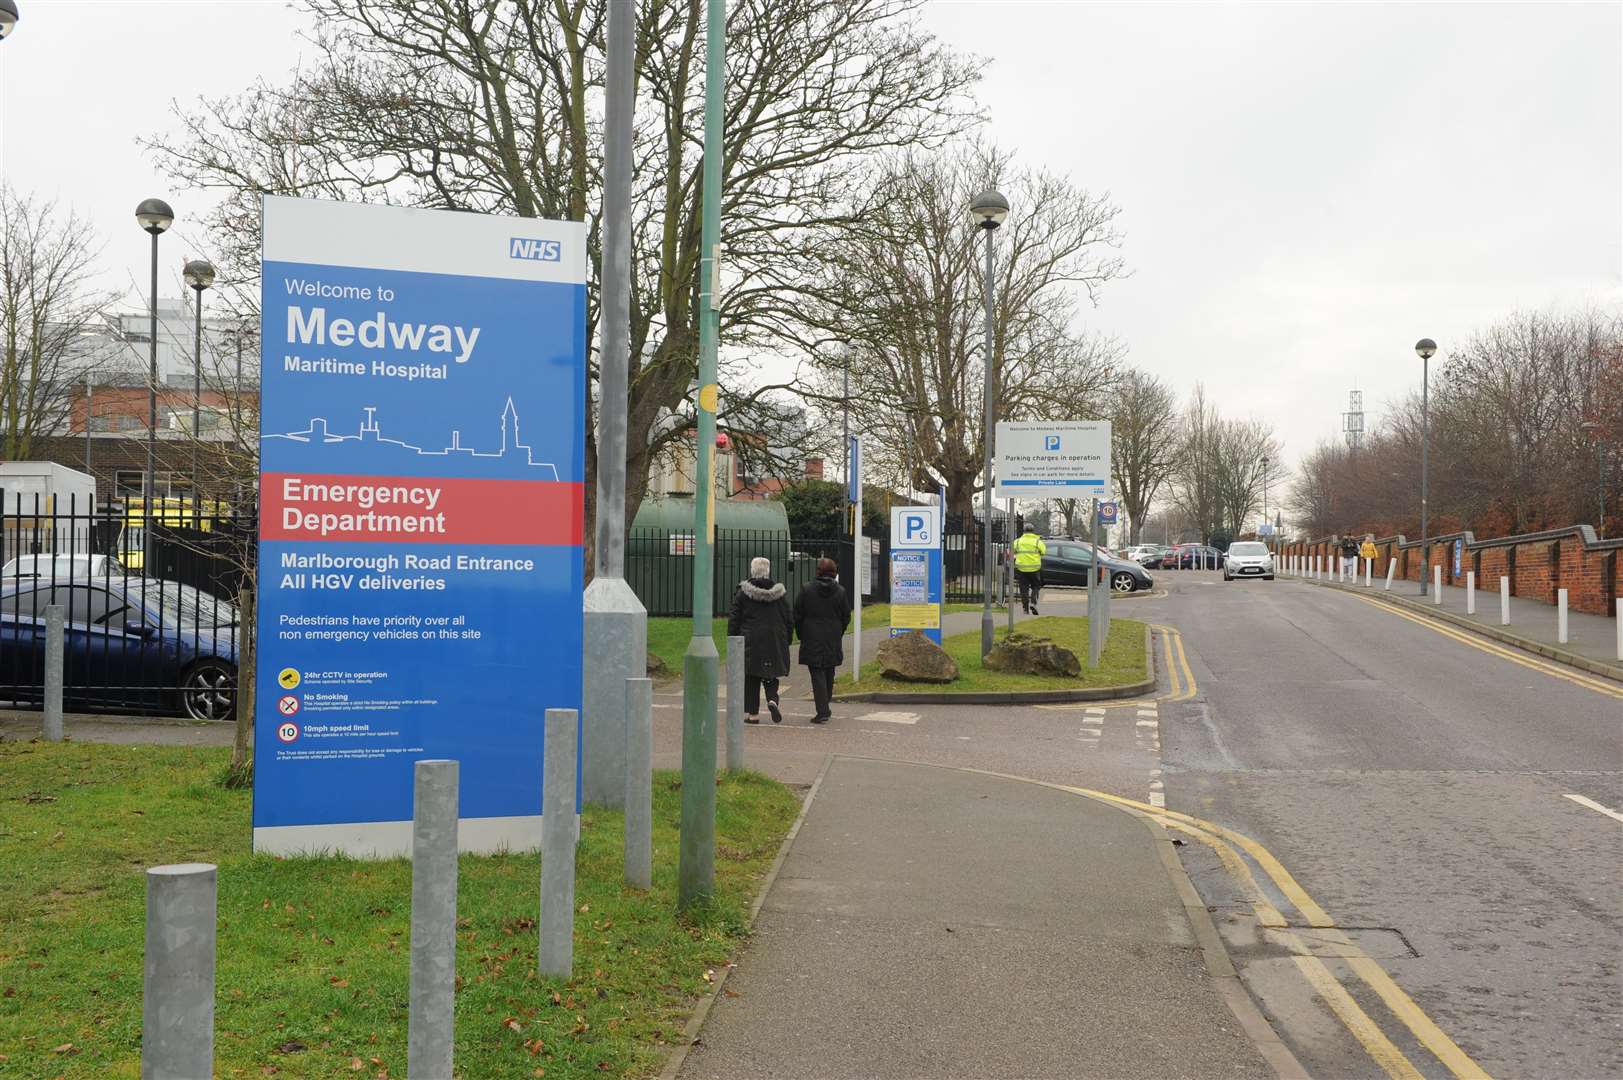 Cases have risen at Medway Maritime Hospital